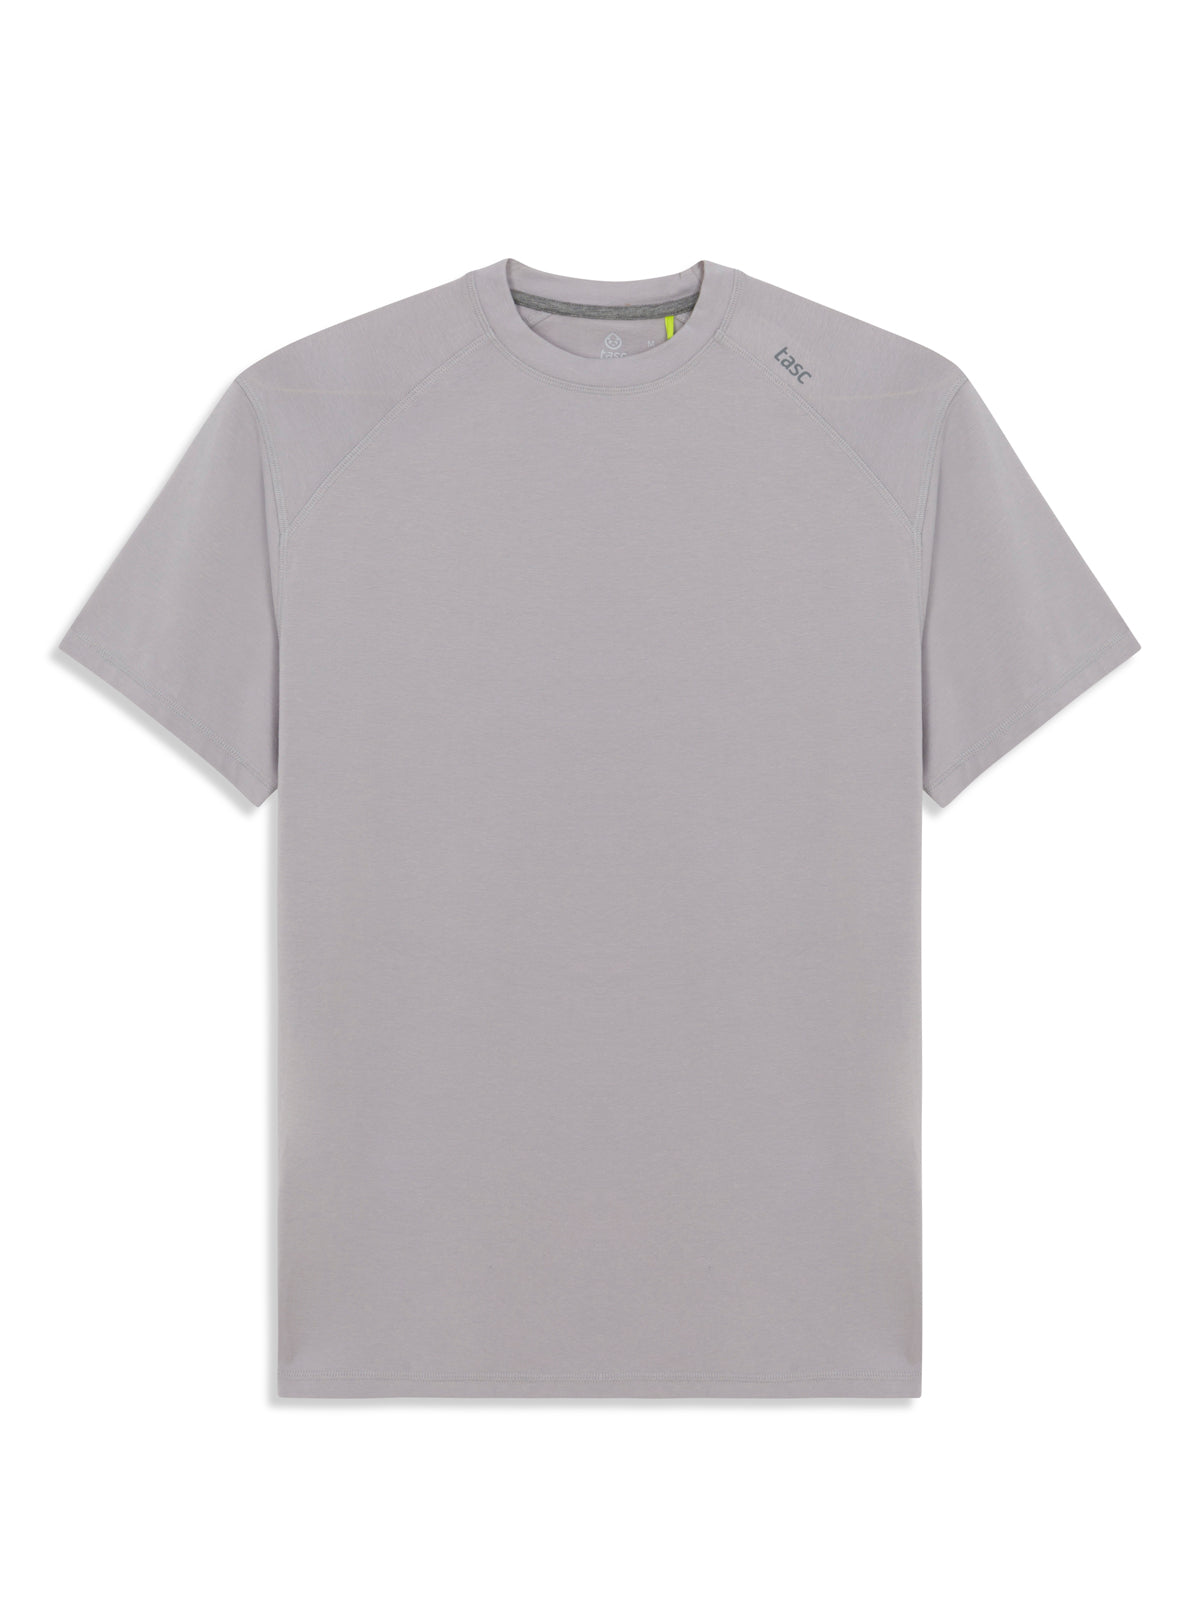 Carrollton Fitness T-Shirt - Seasonal (Silver)